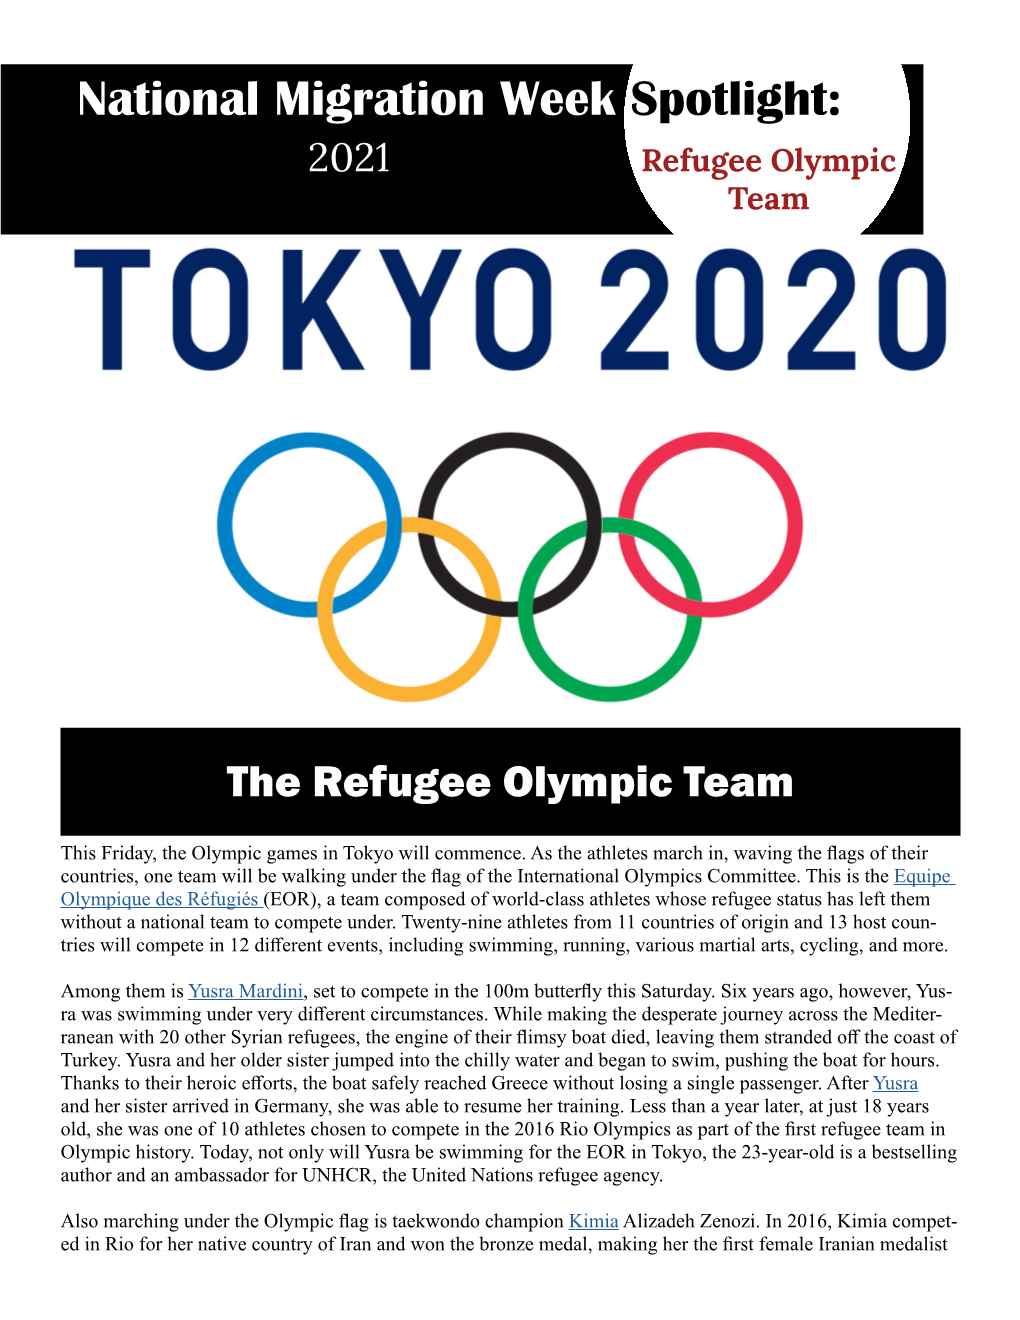 Spotlight on the Refugee Olympic Team